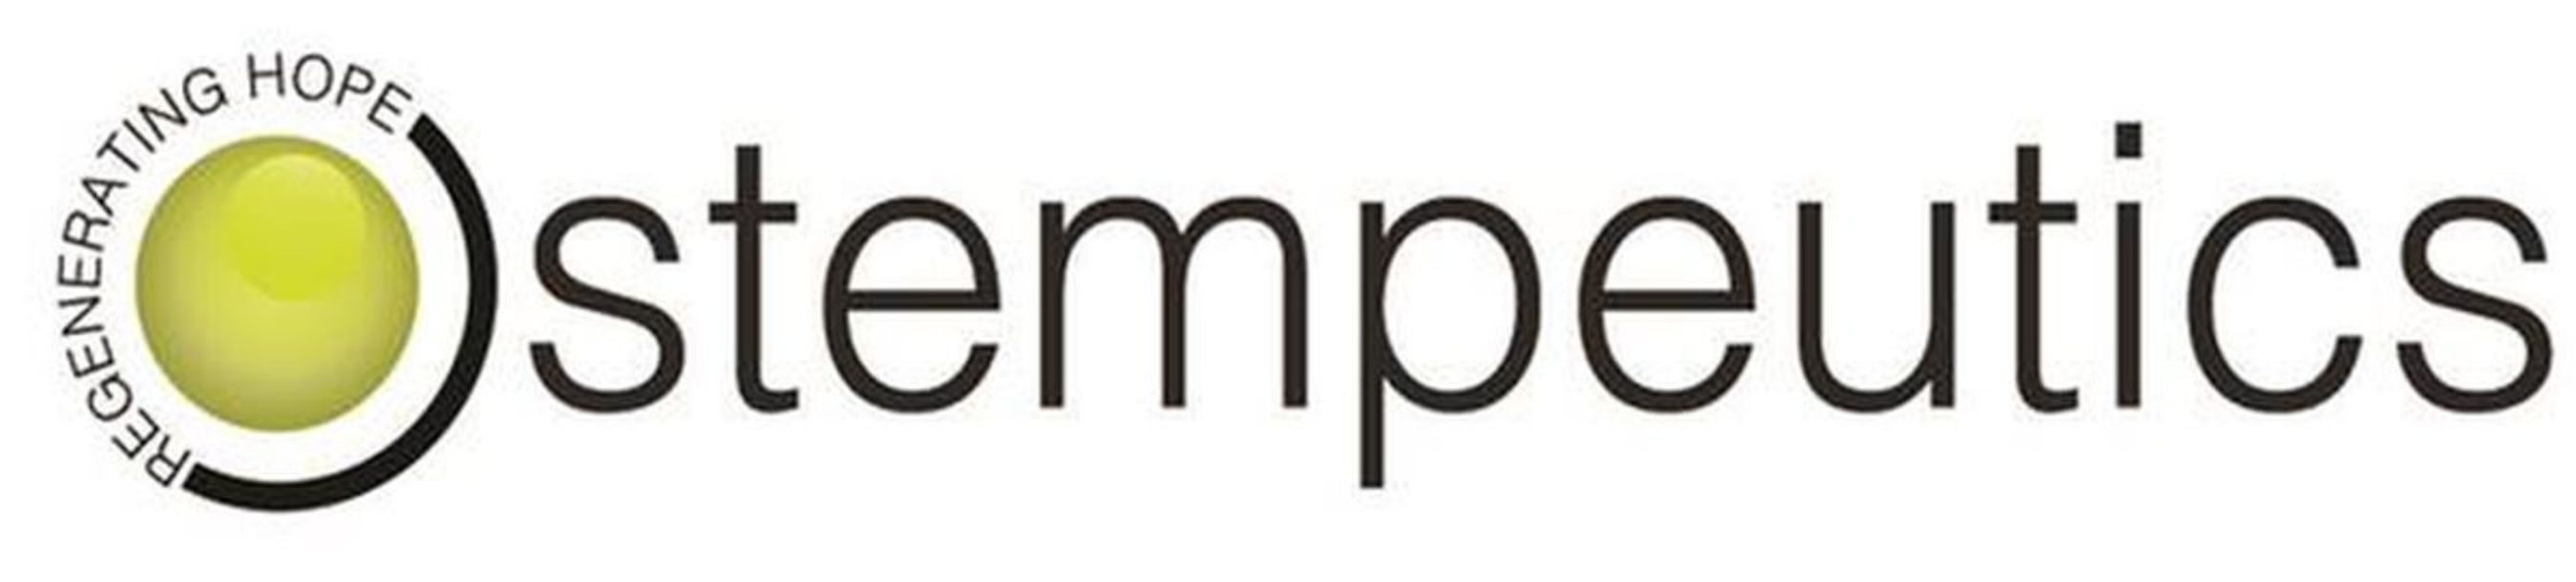 Stempeutics Research - Logo (PRNewsFoto/Stempeutics Research)